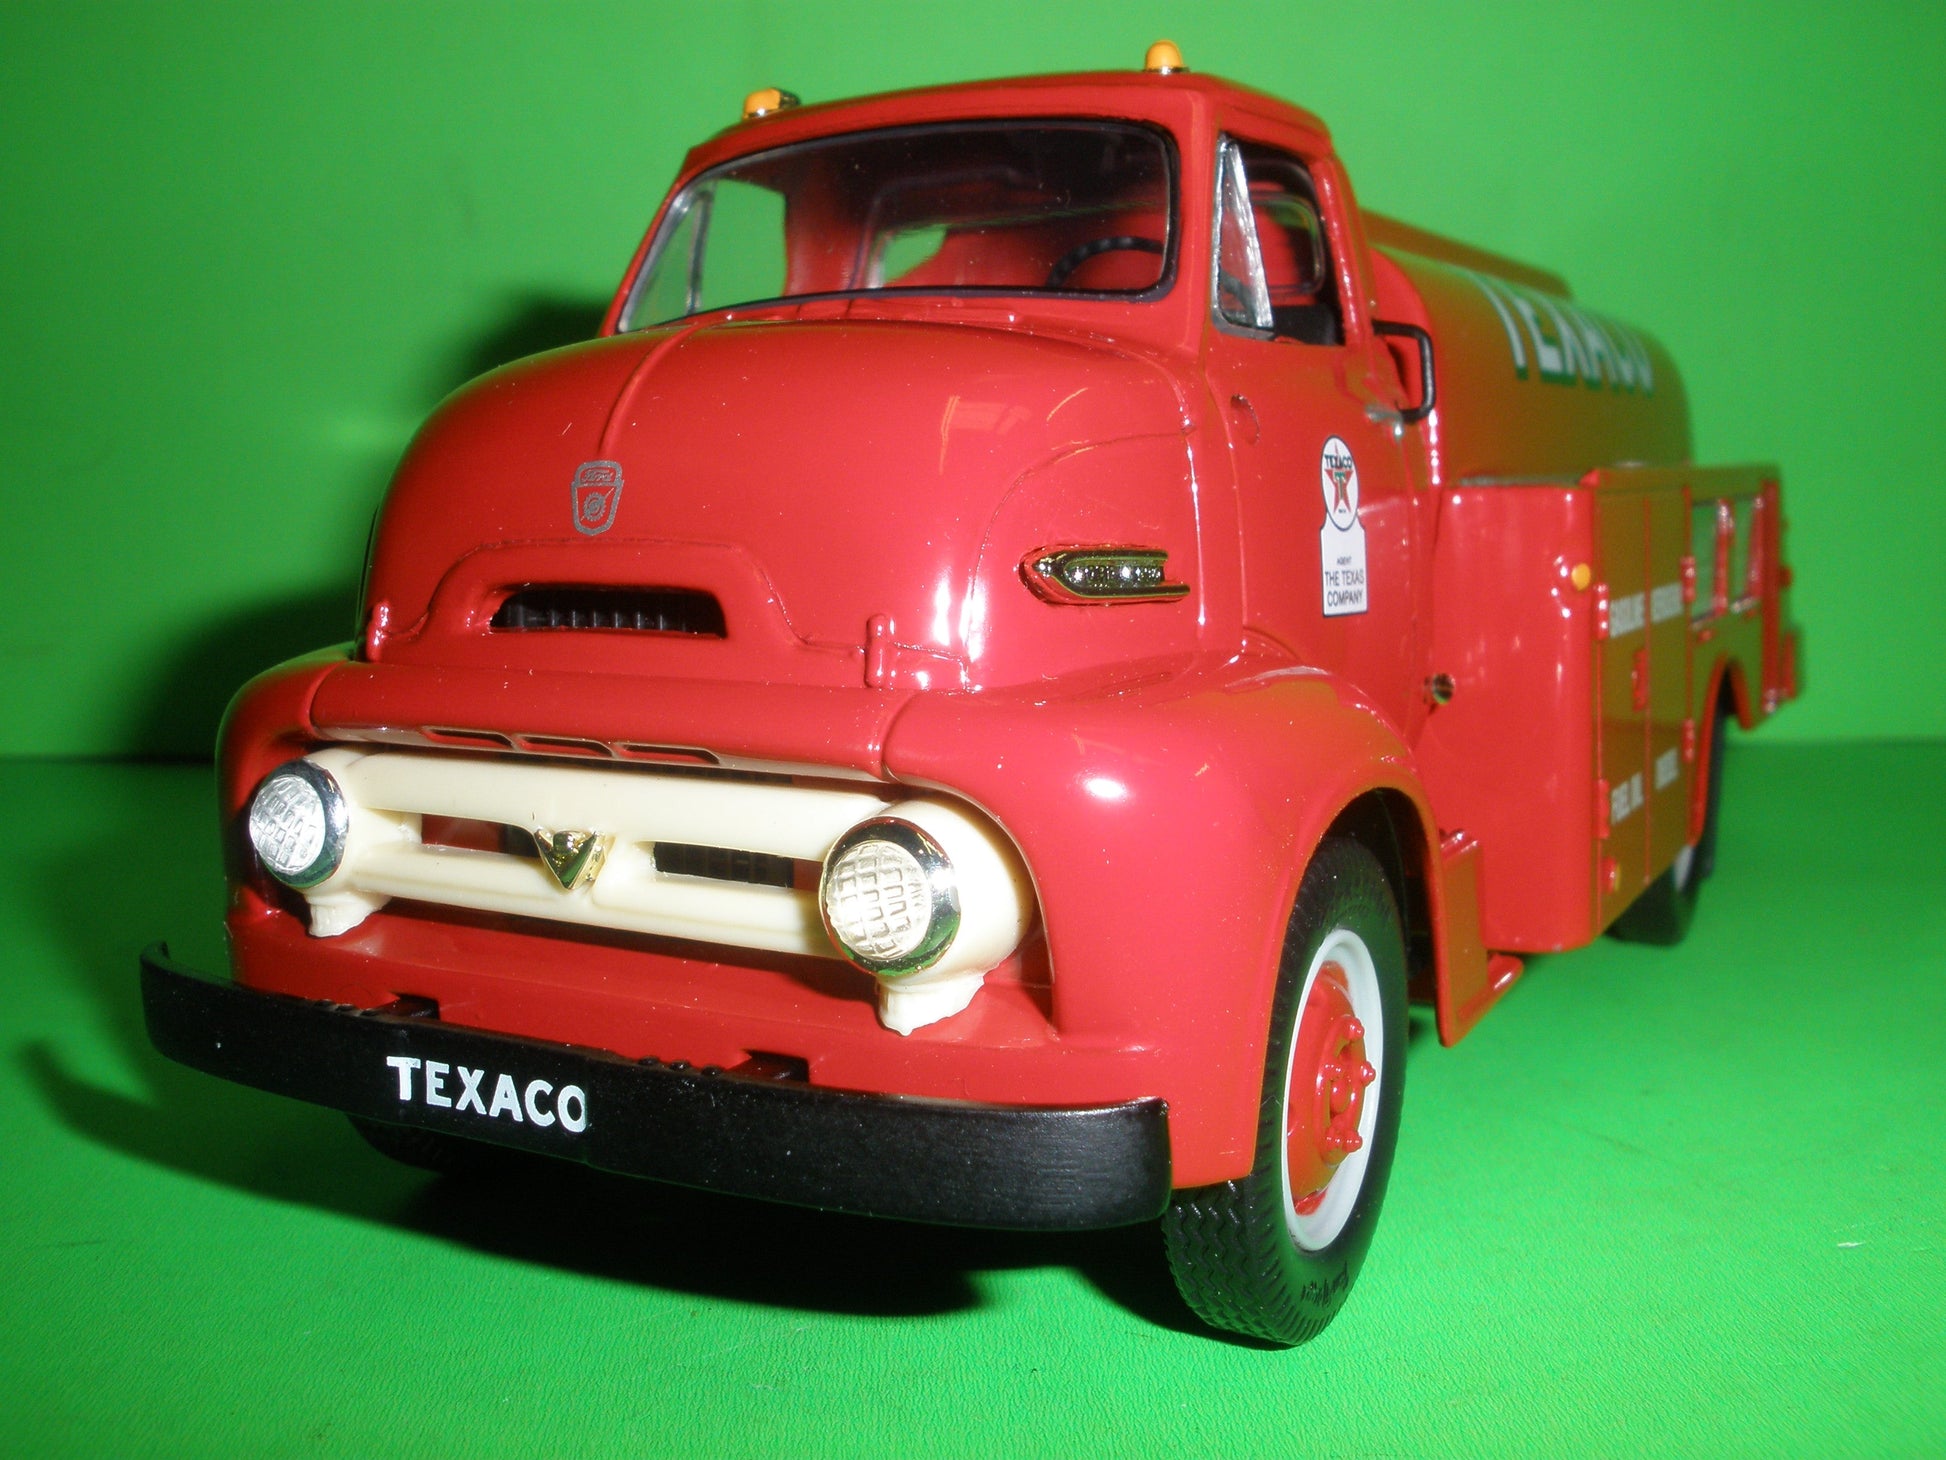 Texaco 1953 Ford C-600 Tanker Truck Farm Series